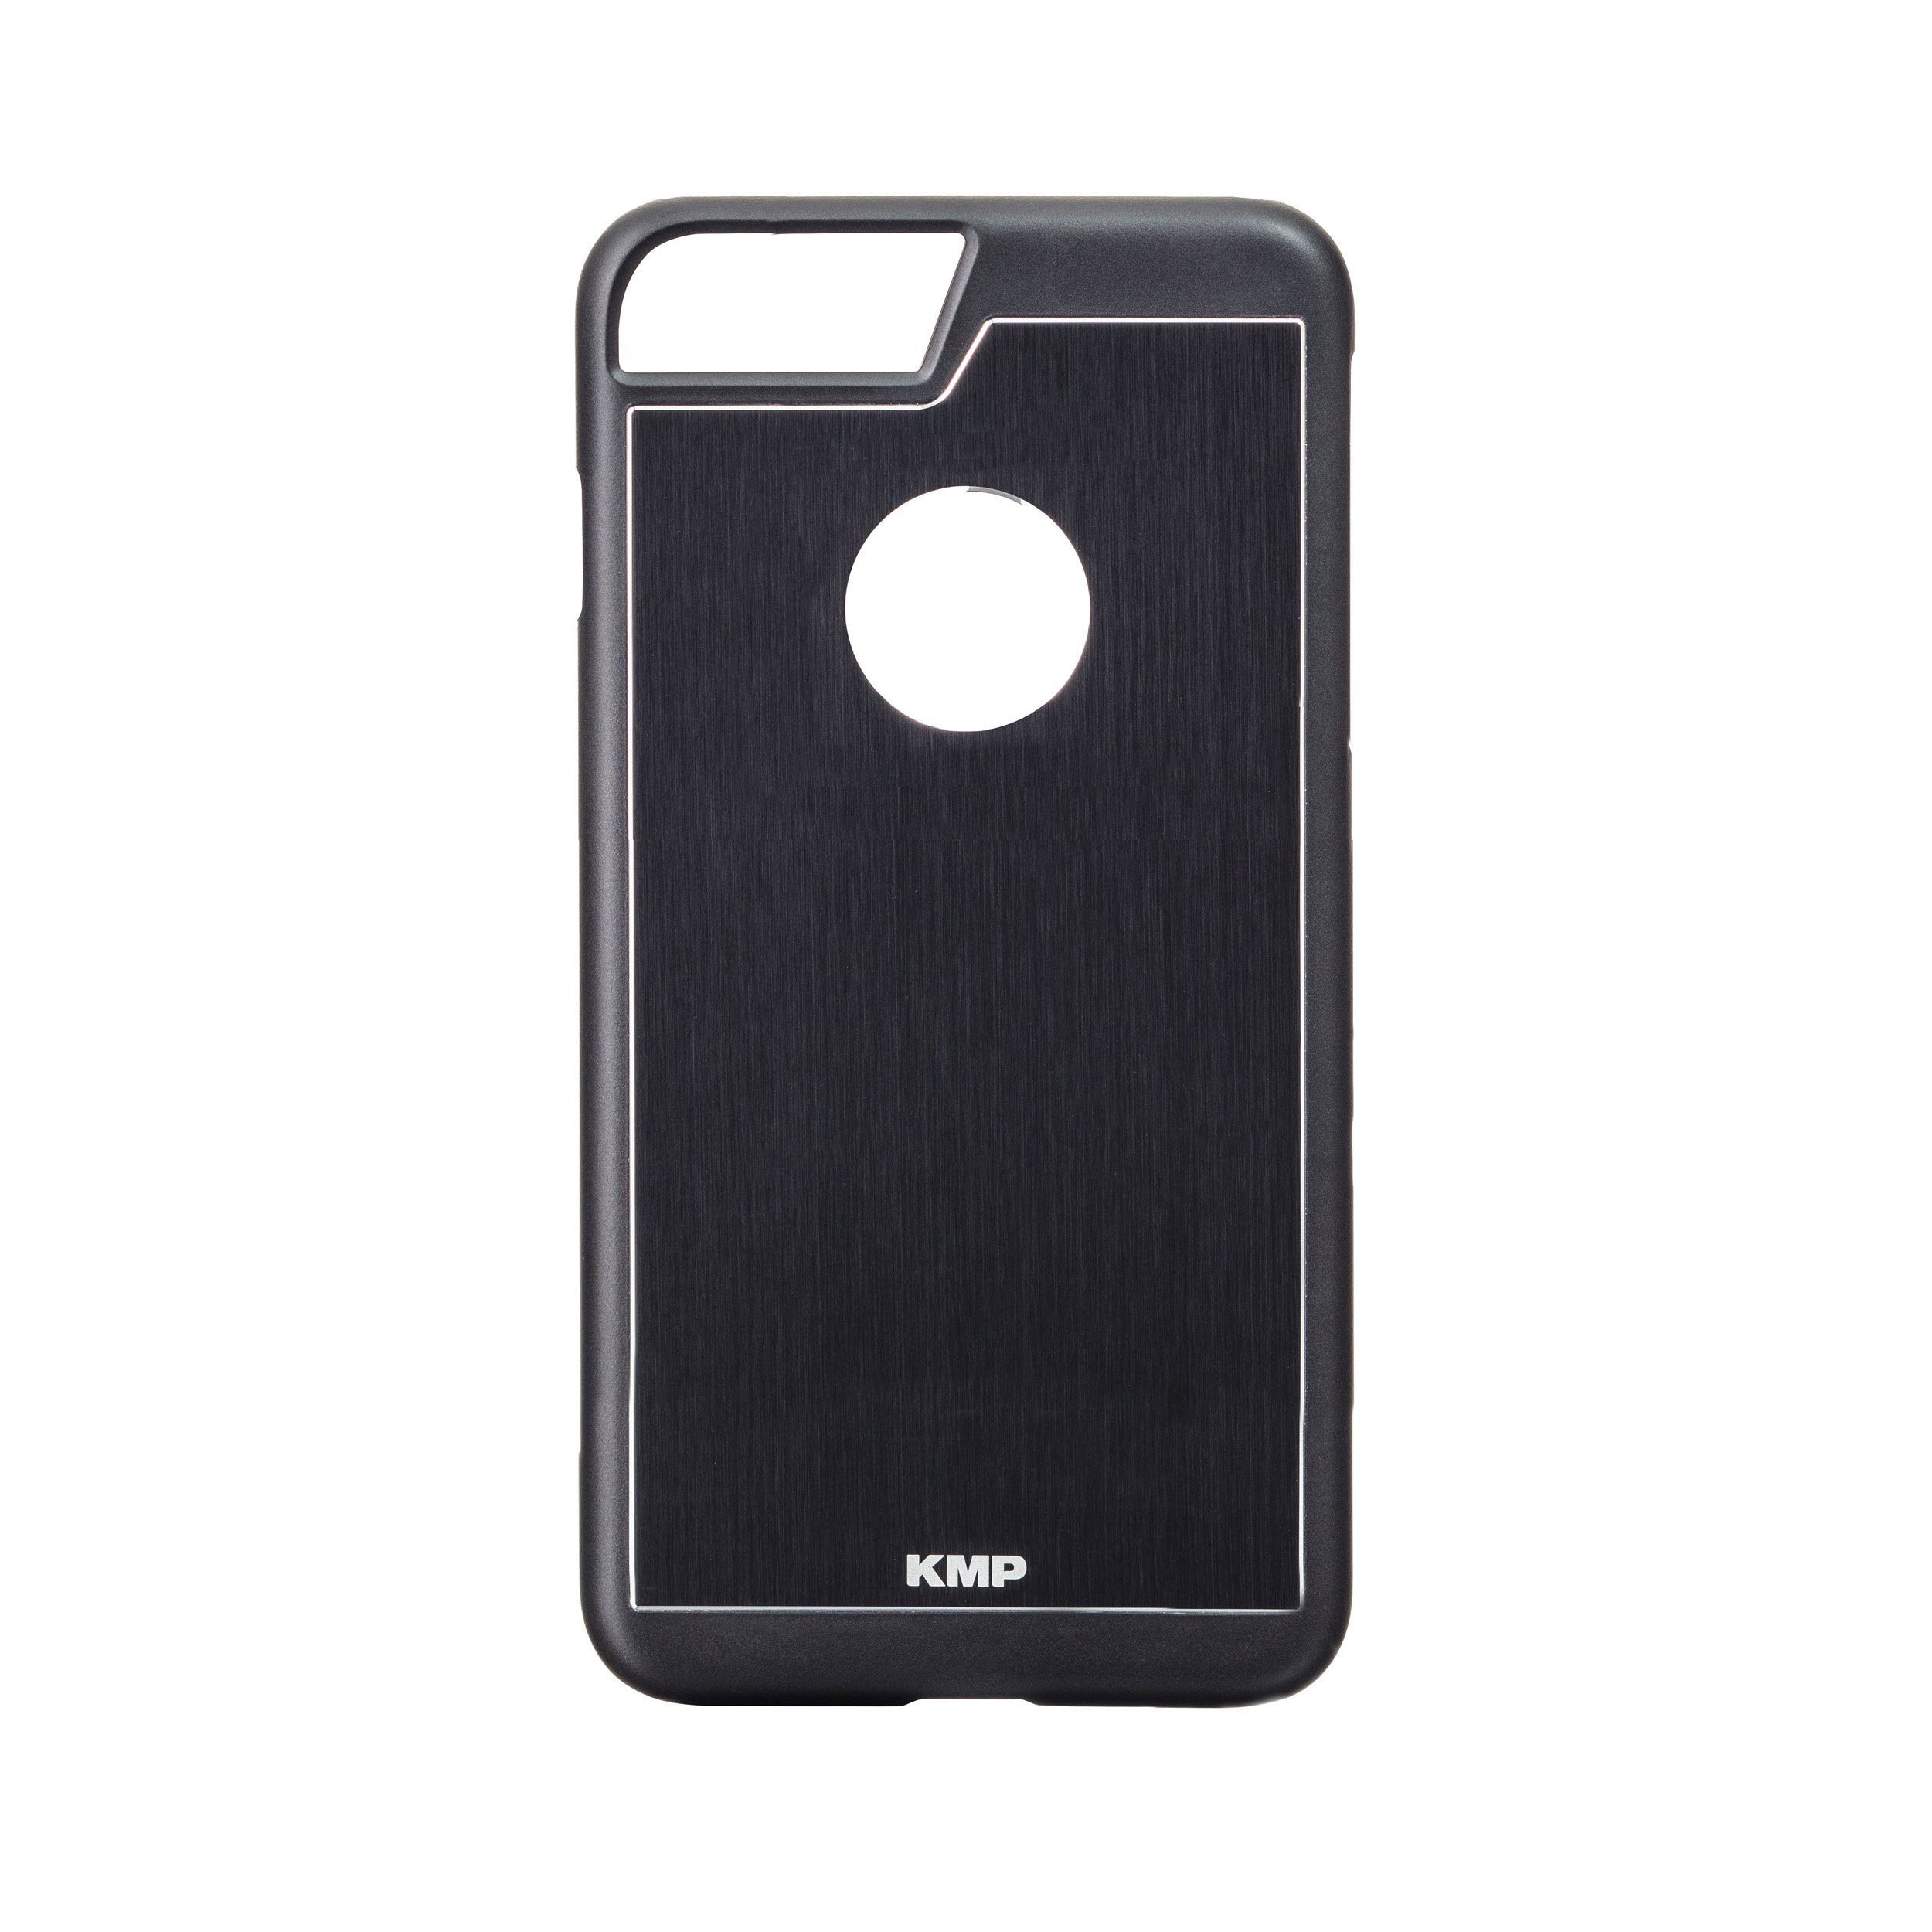 KMP Creative Lifesytle Product Handyhülle Aluminium Schutzhülle für iPhone 7 Plus Black 5,5 Zoll